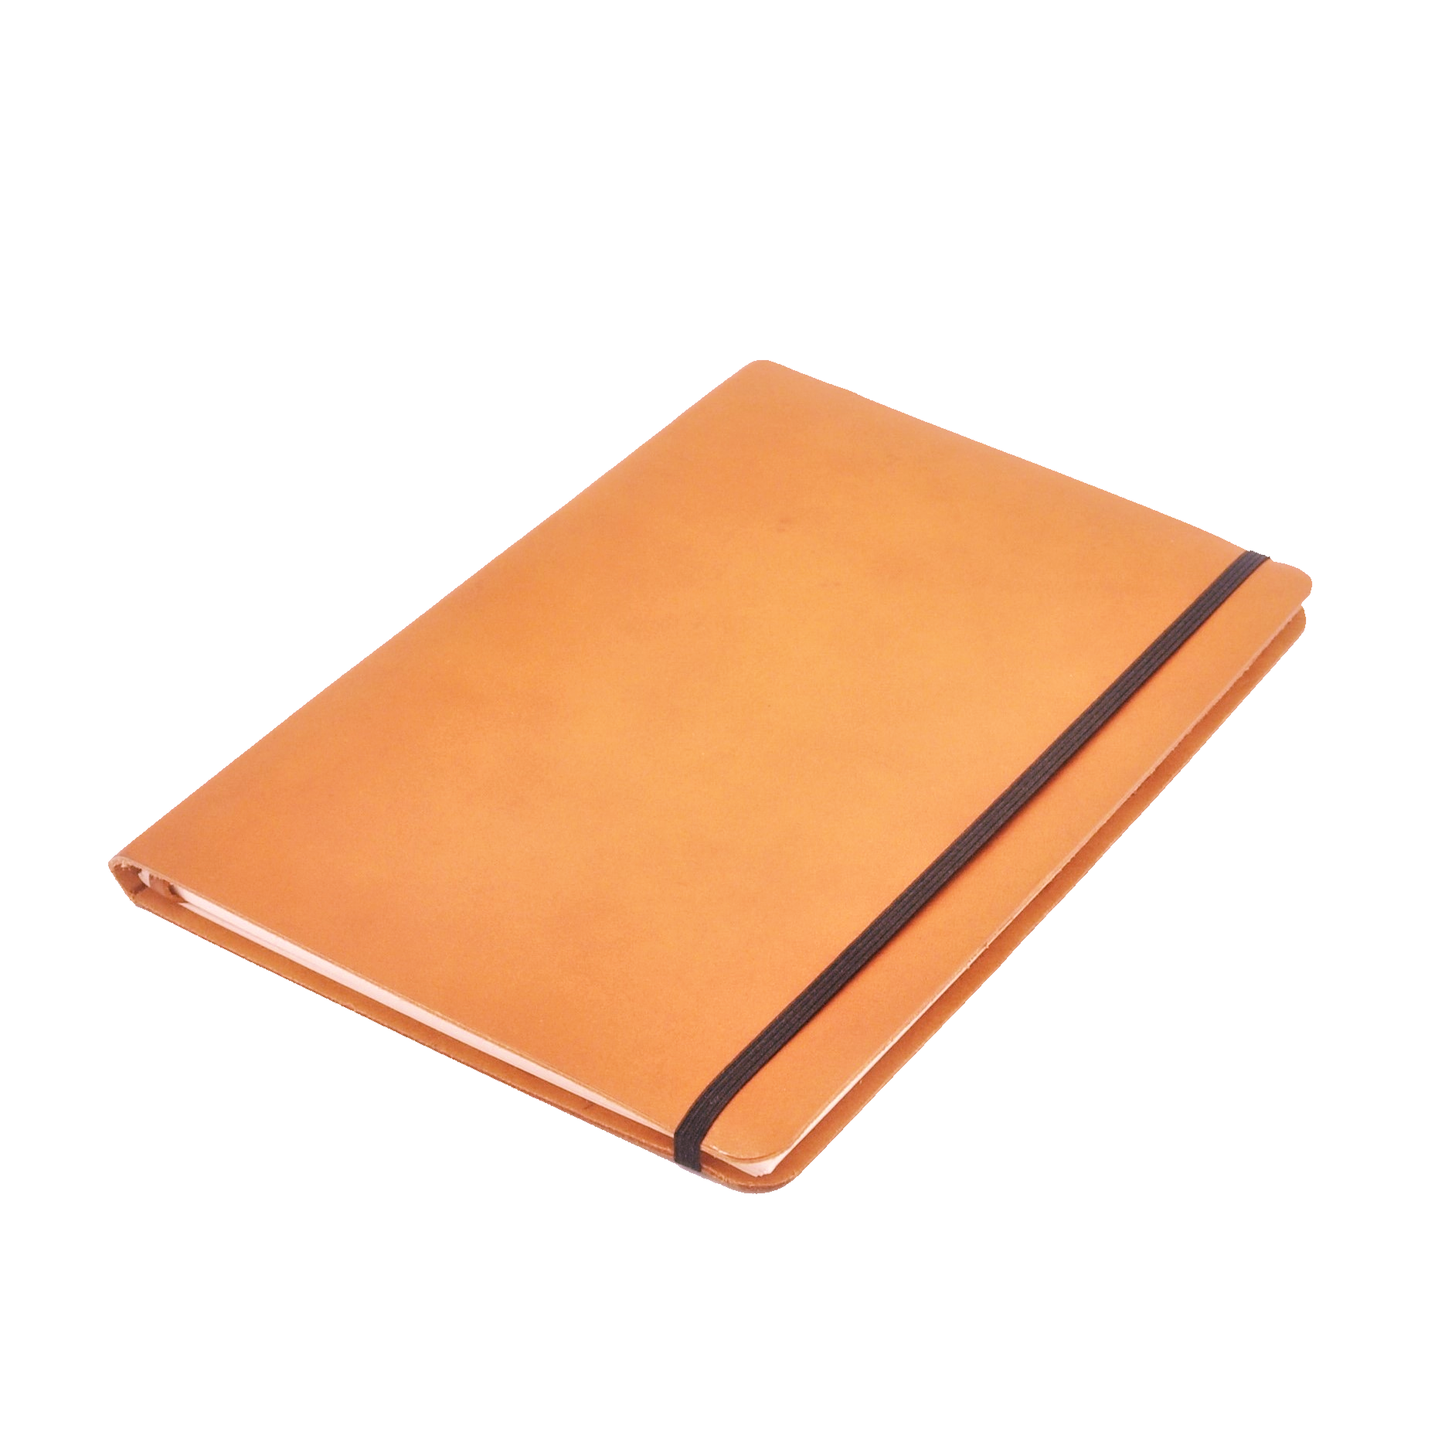 ANCONA B5-P Premium Leather Artist's Sketchbook